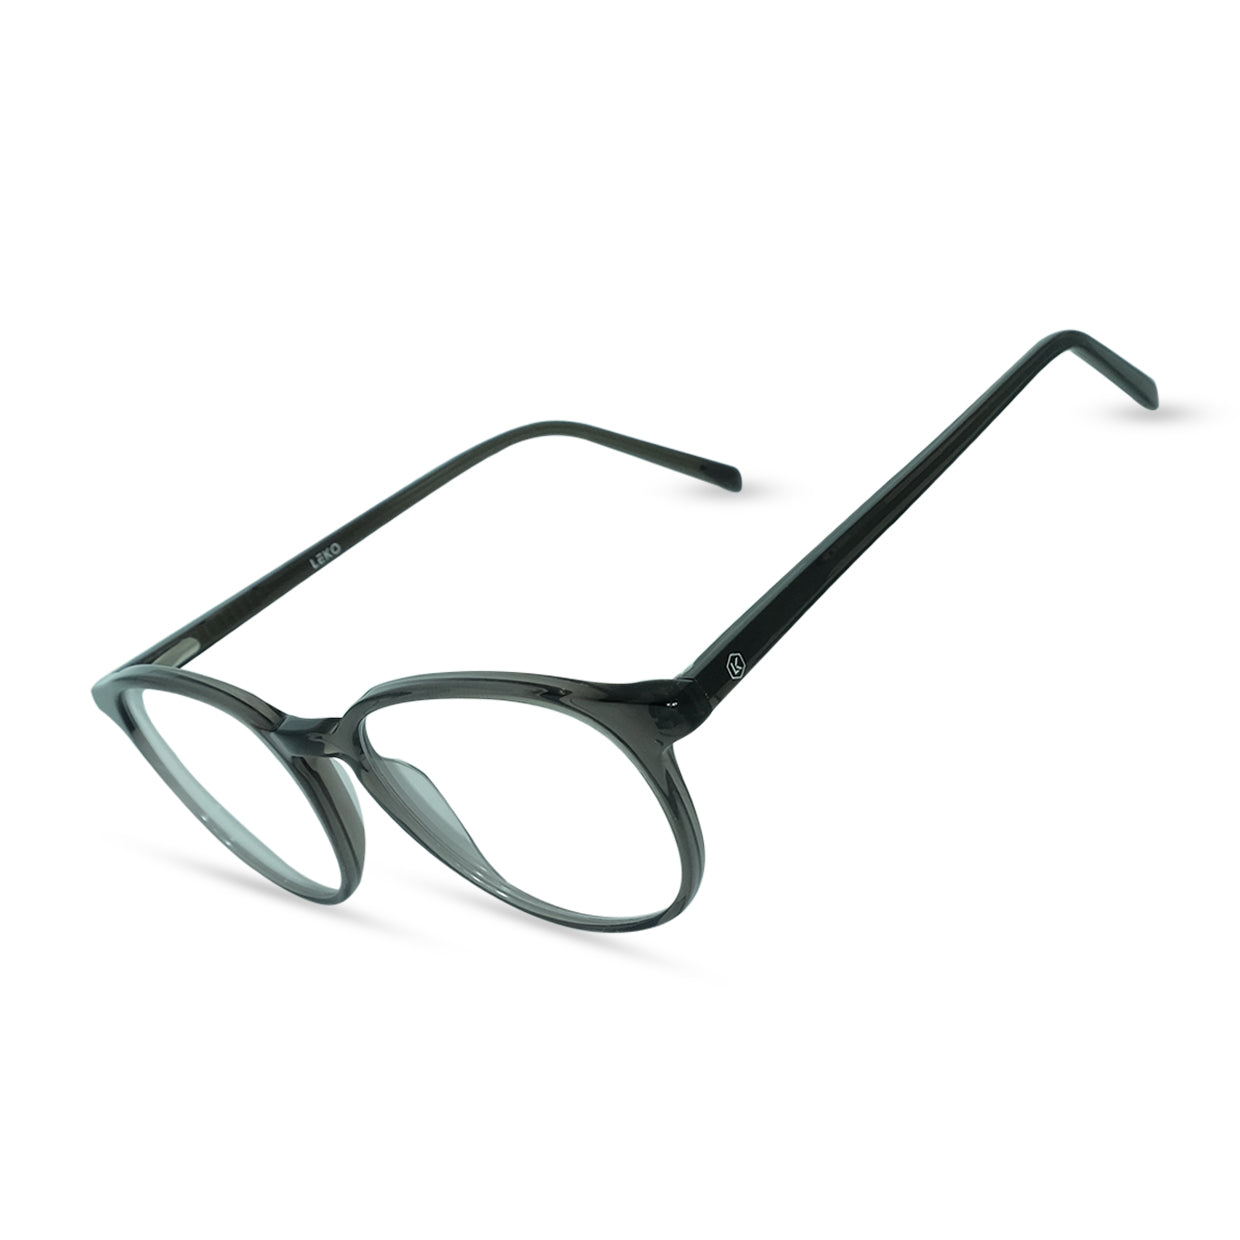 Eco Friendly Glasses in Coal Grey / Blue Light